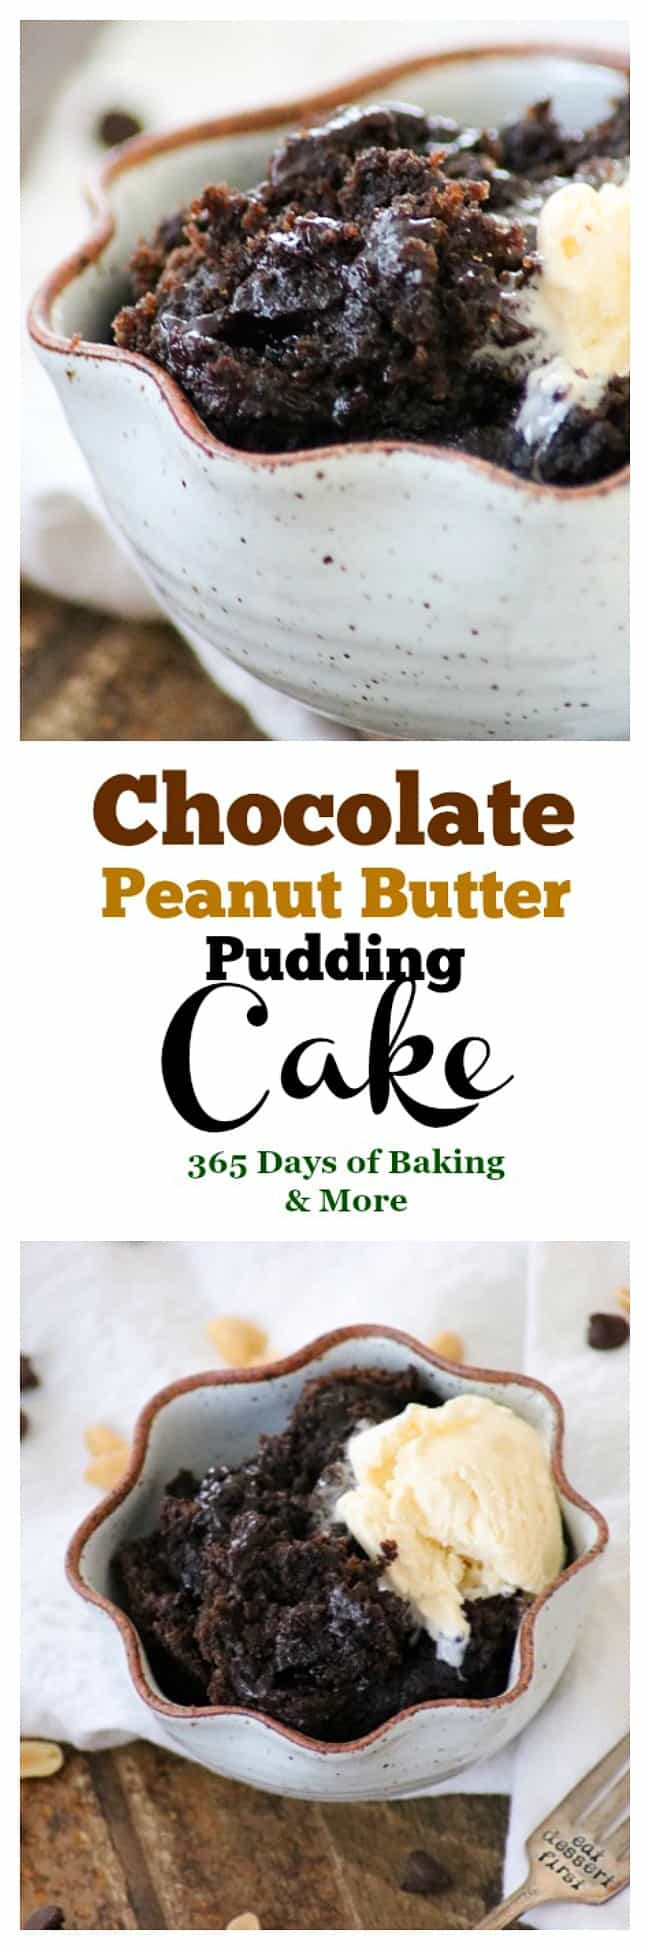 Chocolate Peanut Butter Cake Recipe  Video  Sallys Baking Addiction